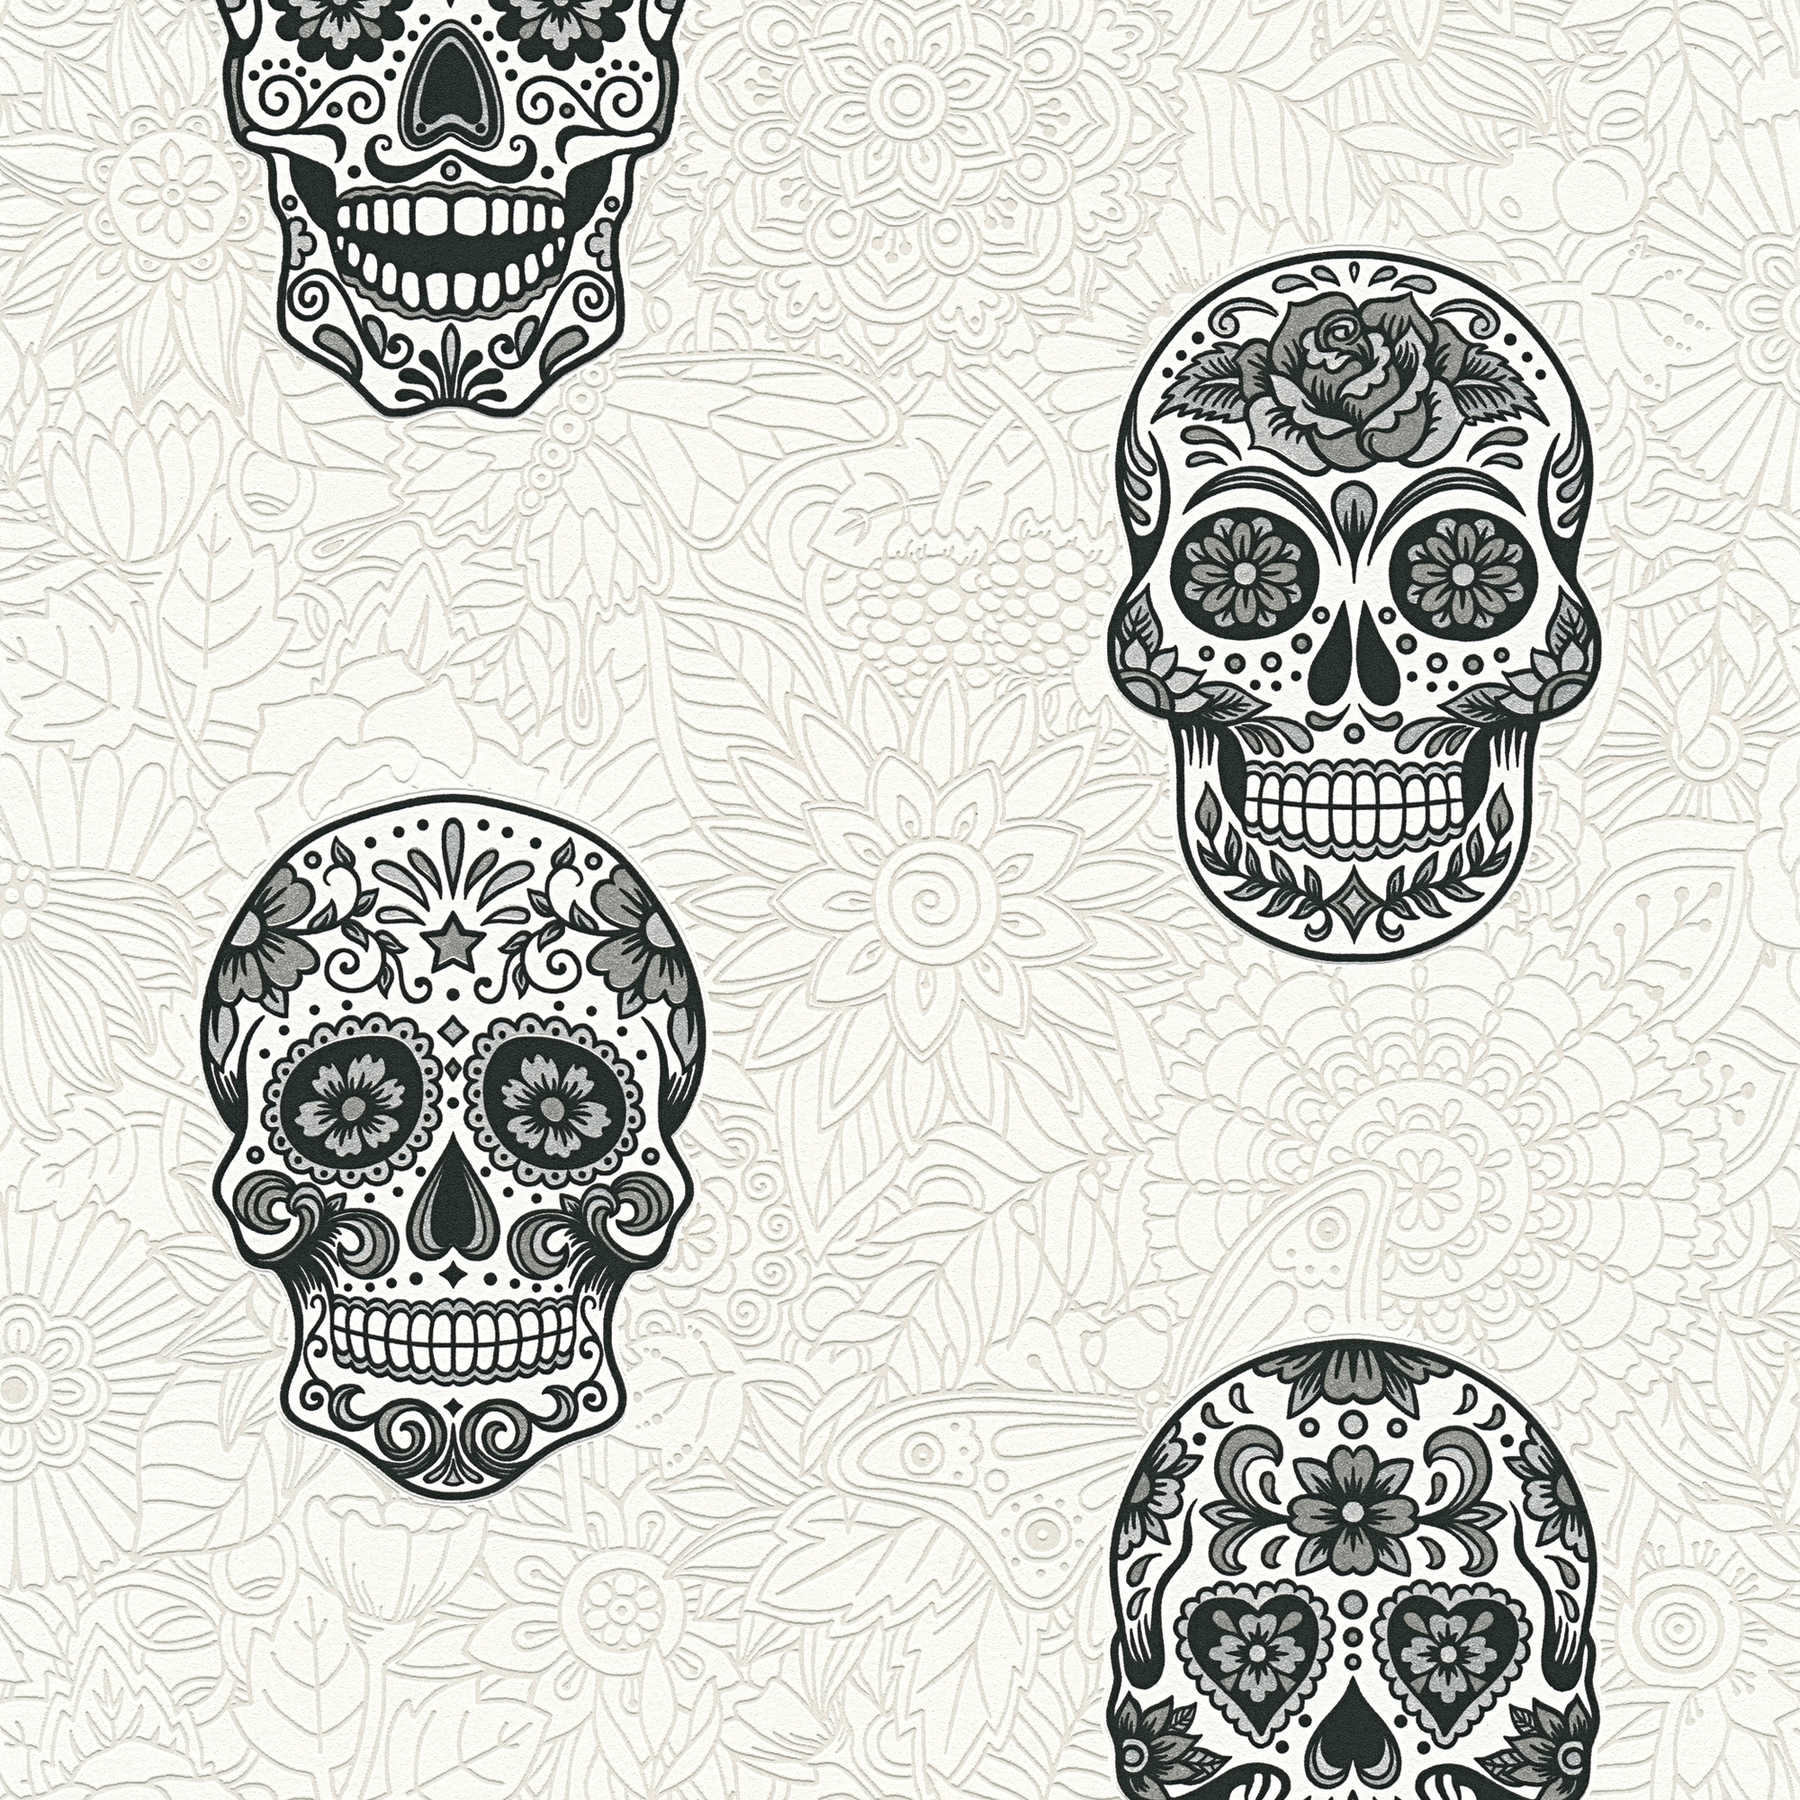 Skull wallpaper with flowers, Dia De Muertos decor - Black, White
